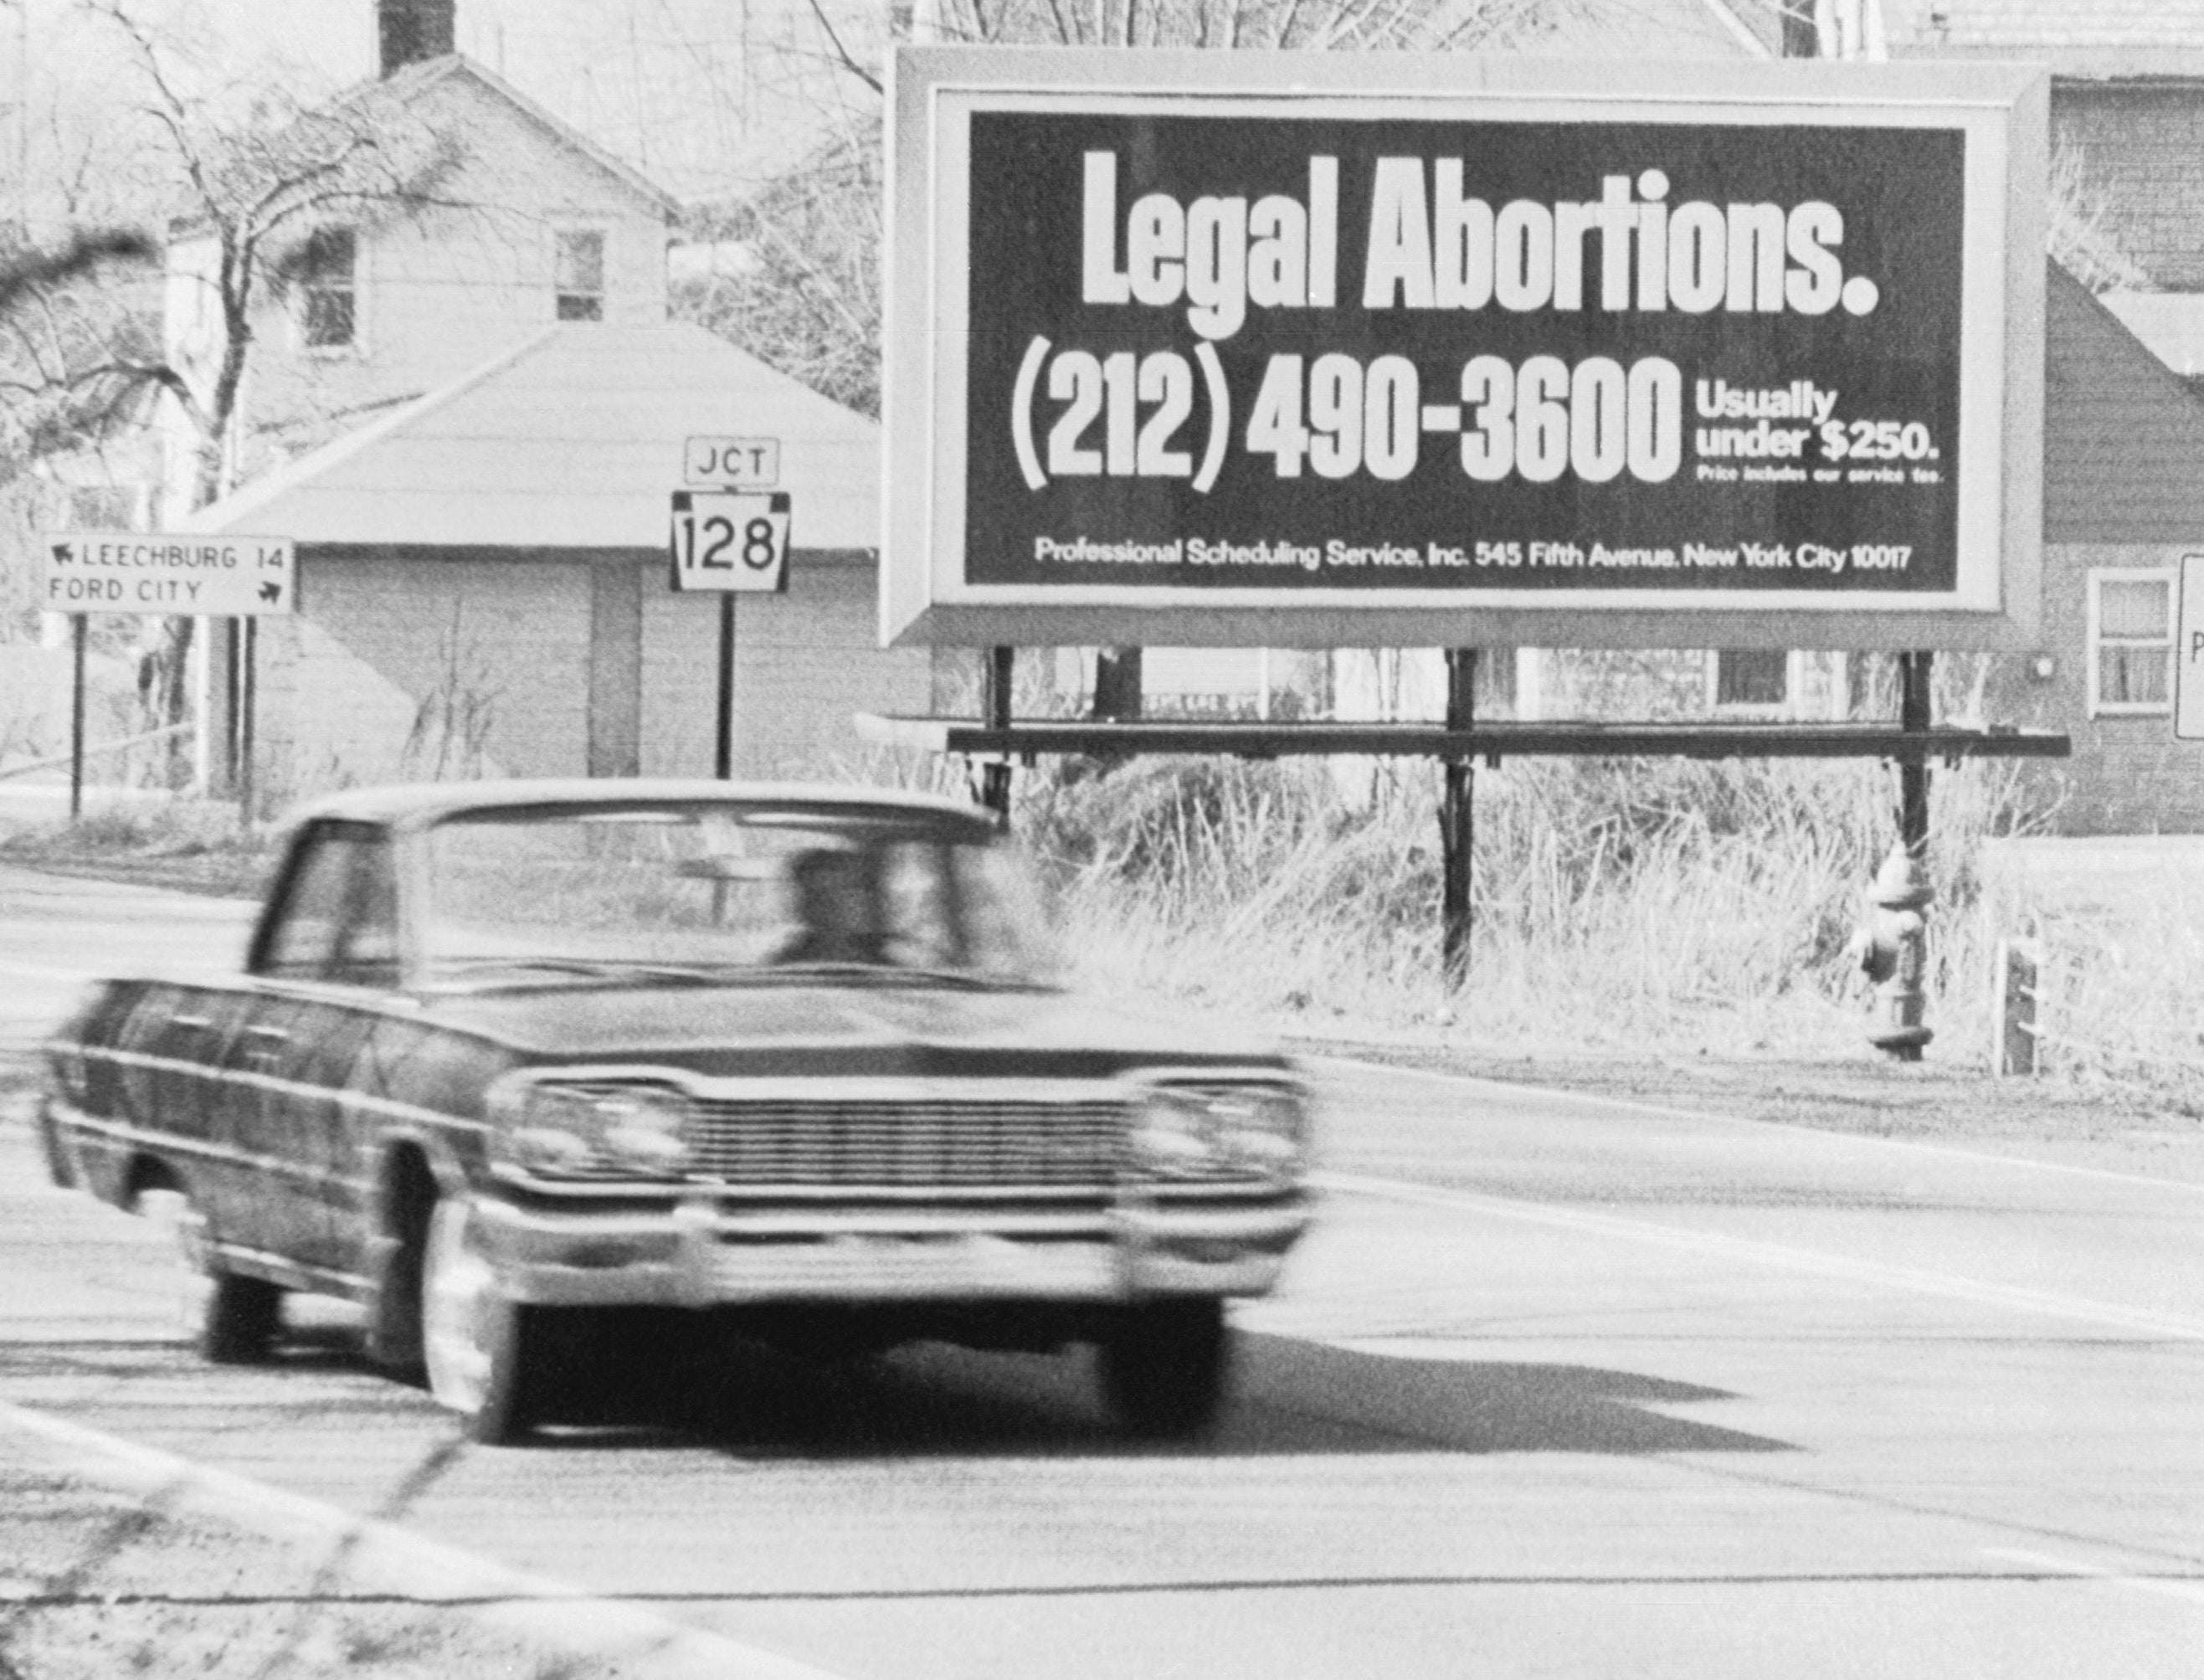 A Pennsylvania billboard advertising legal abortions in New York